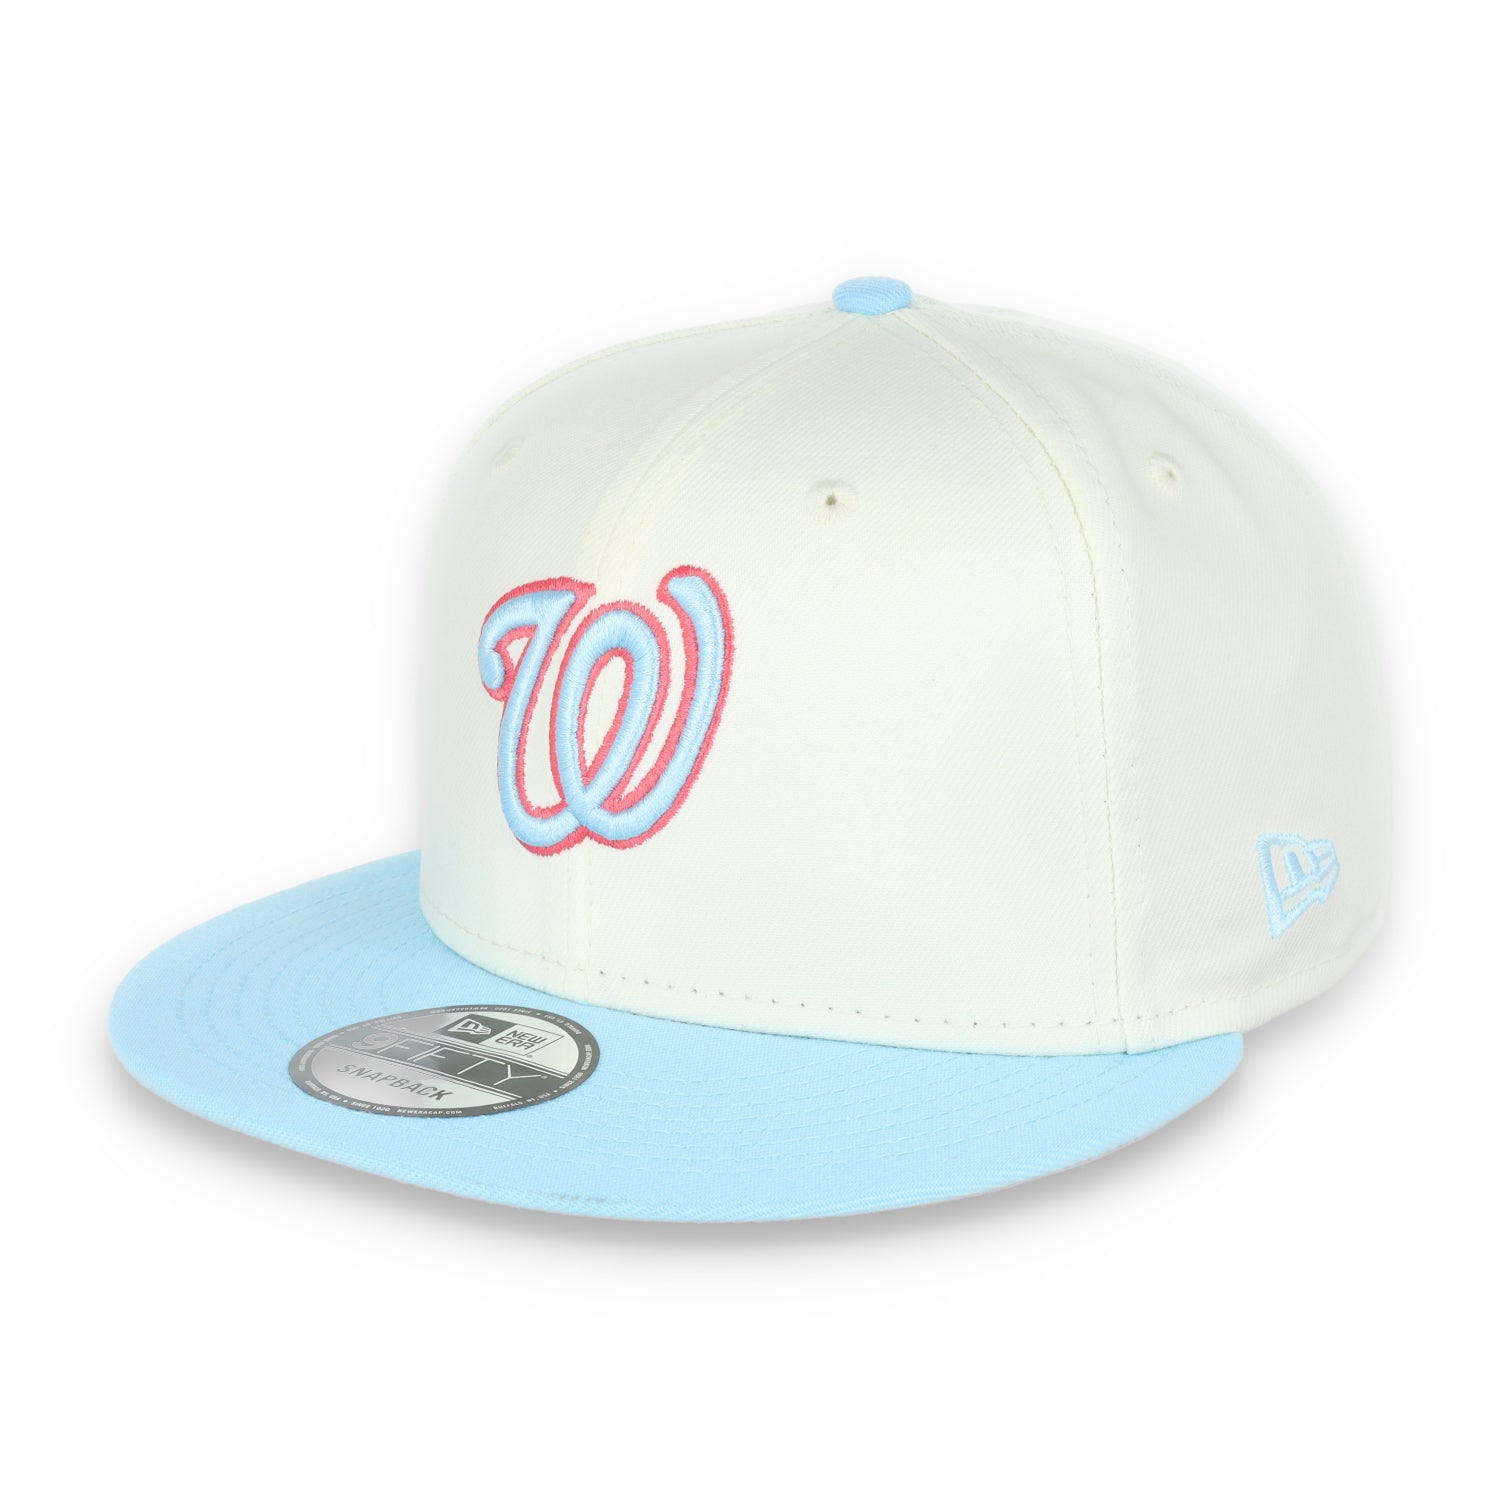 New Era Washington Nationals 2-Tone Color Pack 9FIFTY Snapback Hat - Chrome/Baby Blue